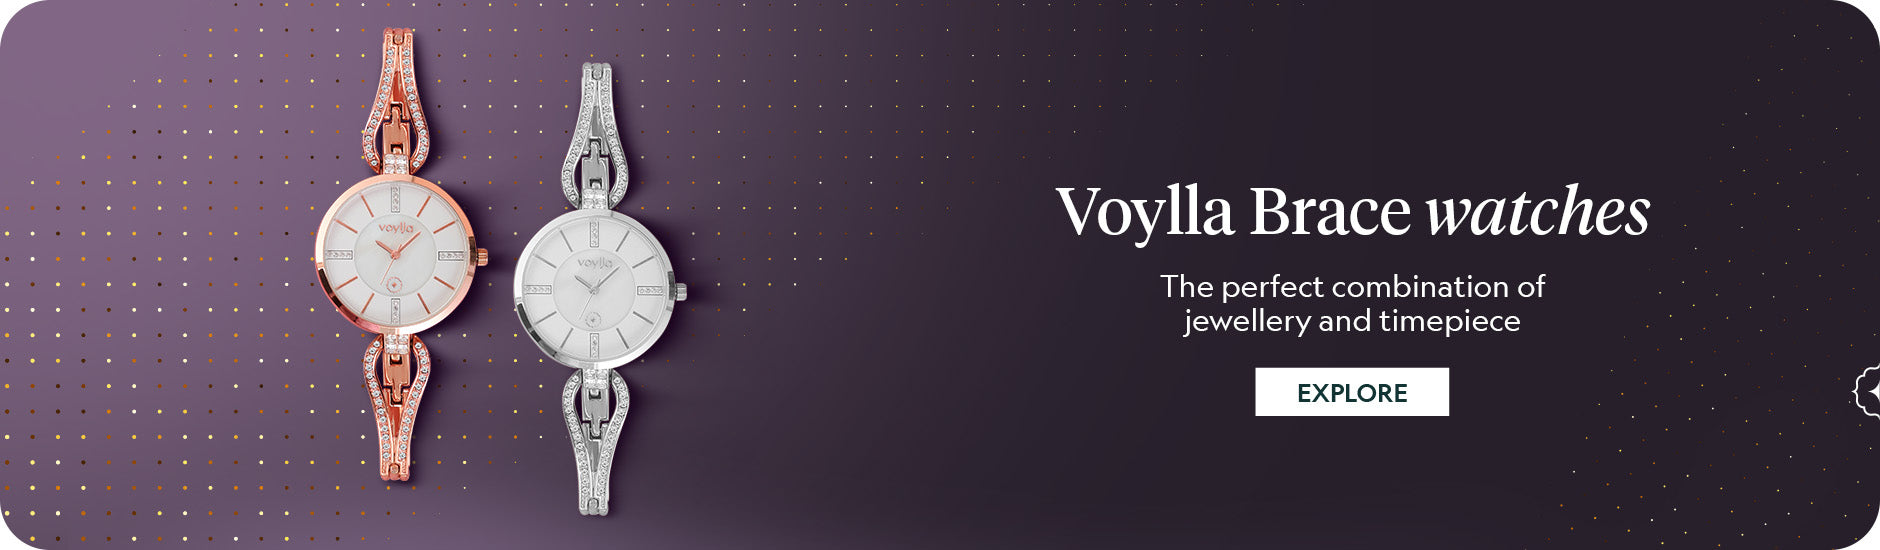 voylla.com - Get Up to 55% off